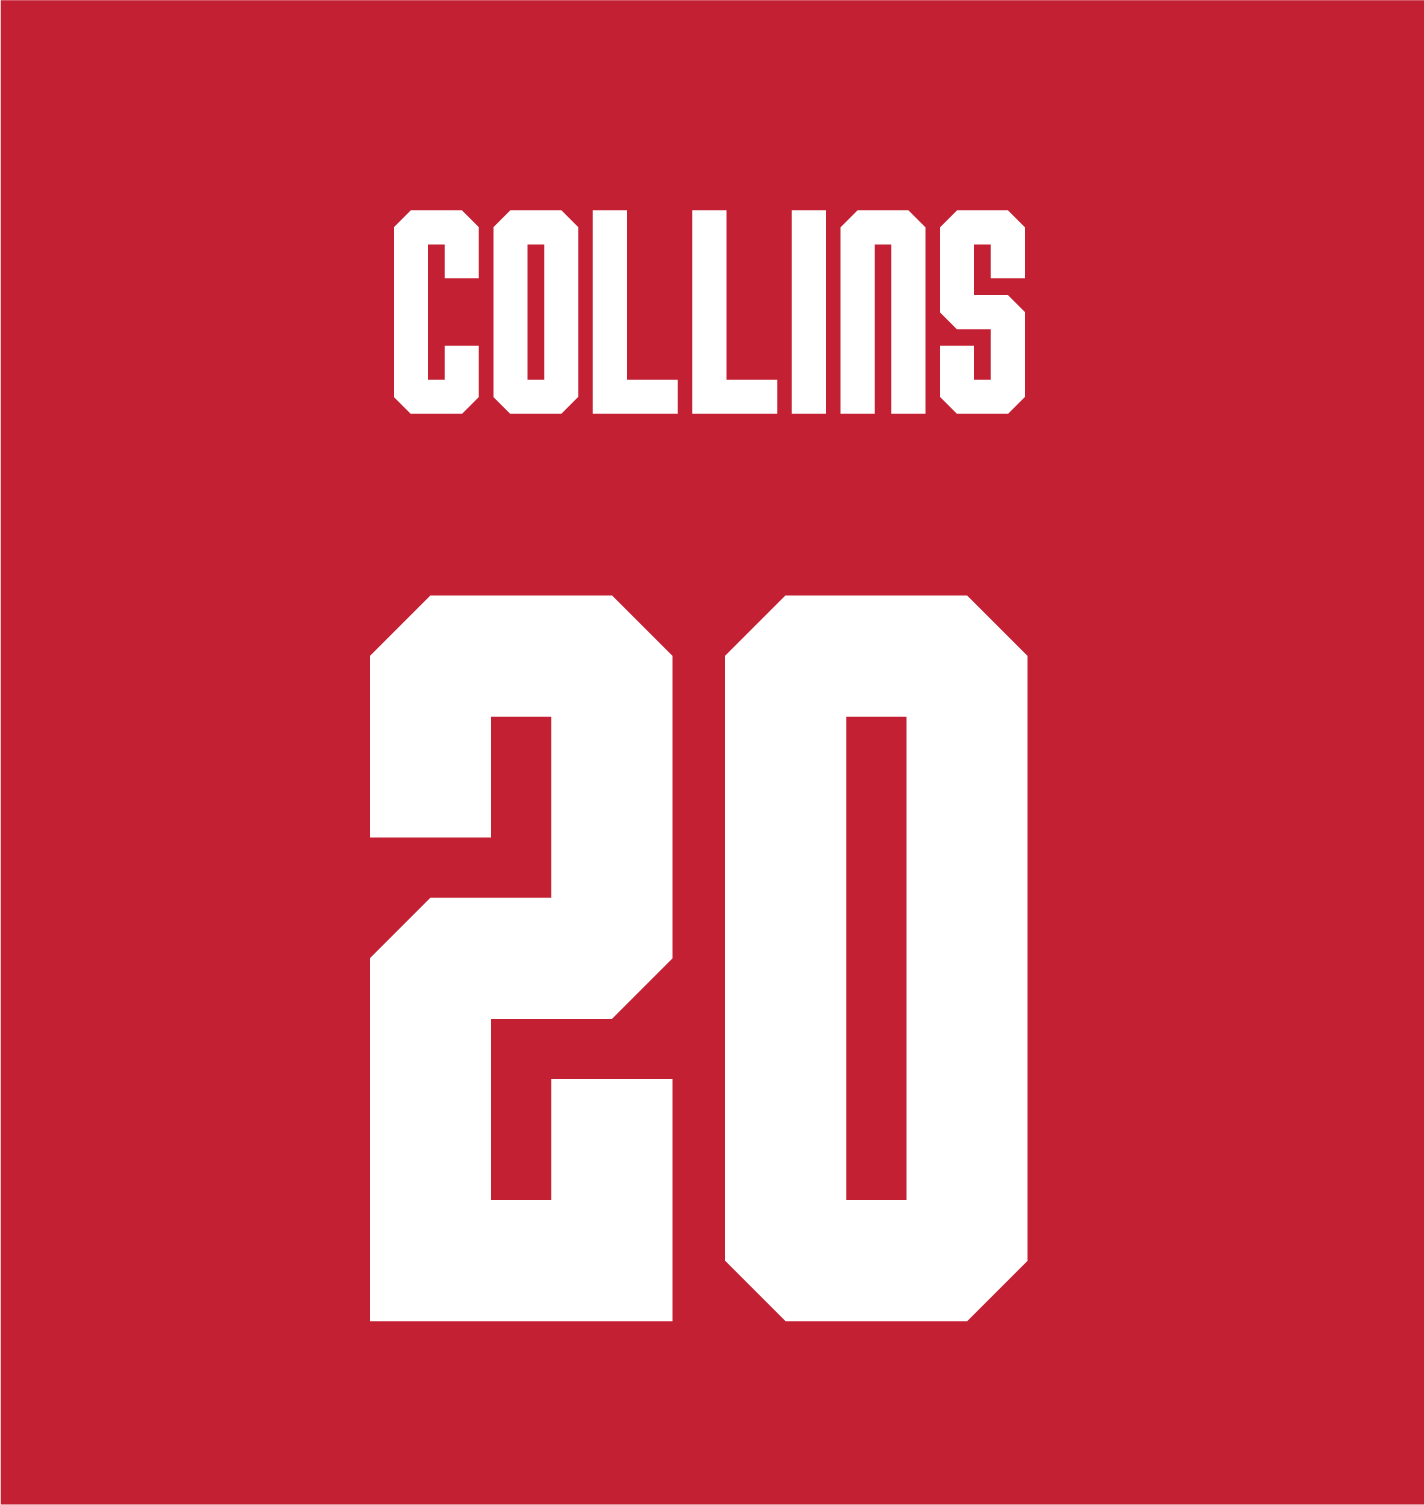 Diana Collins | #20